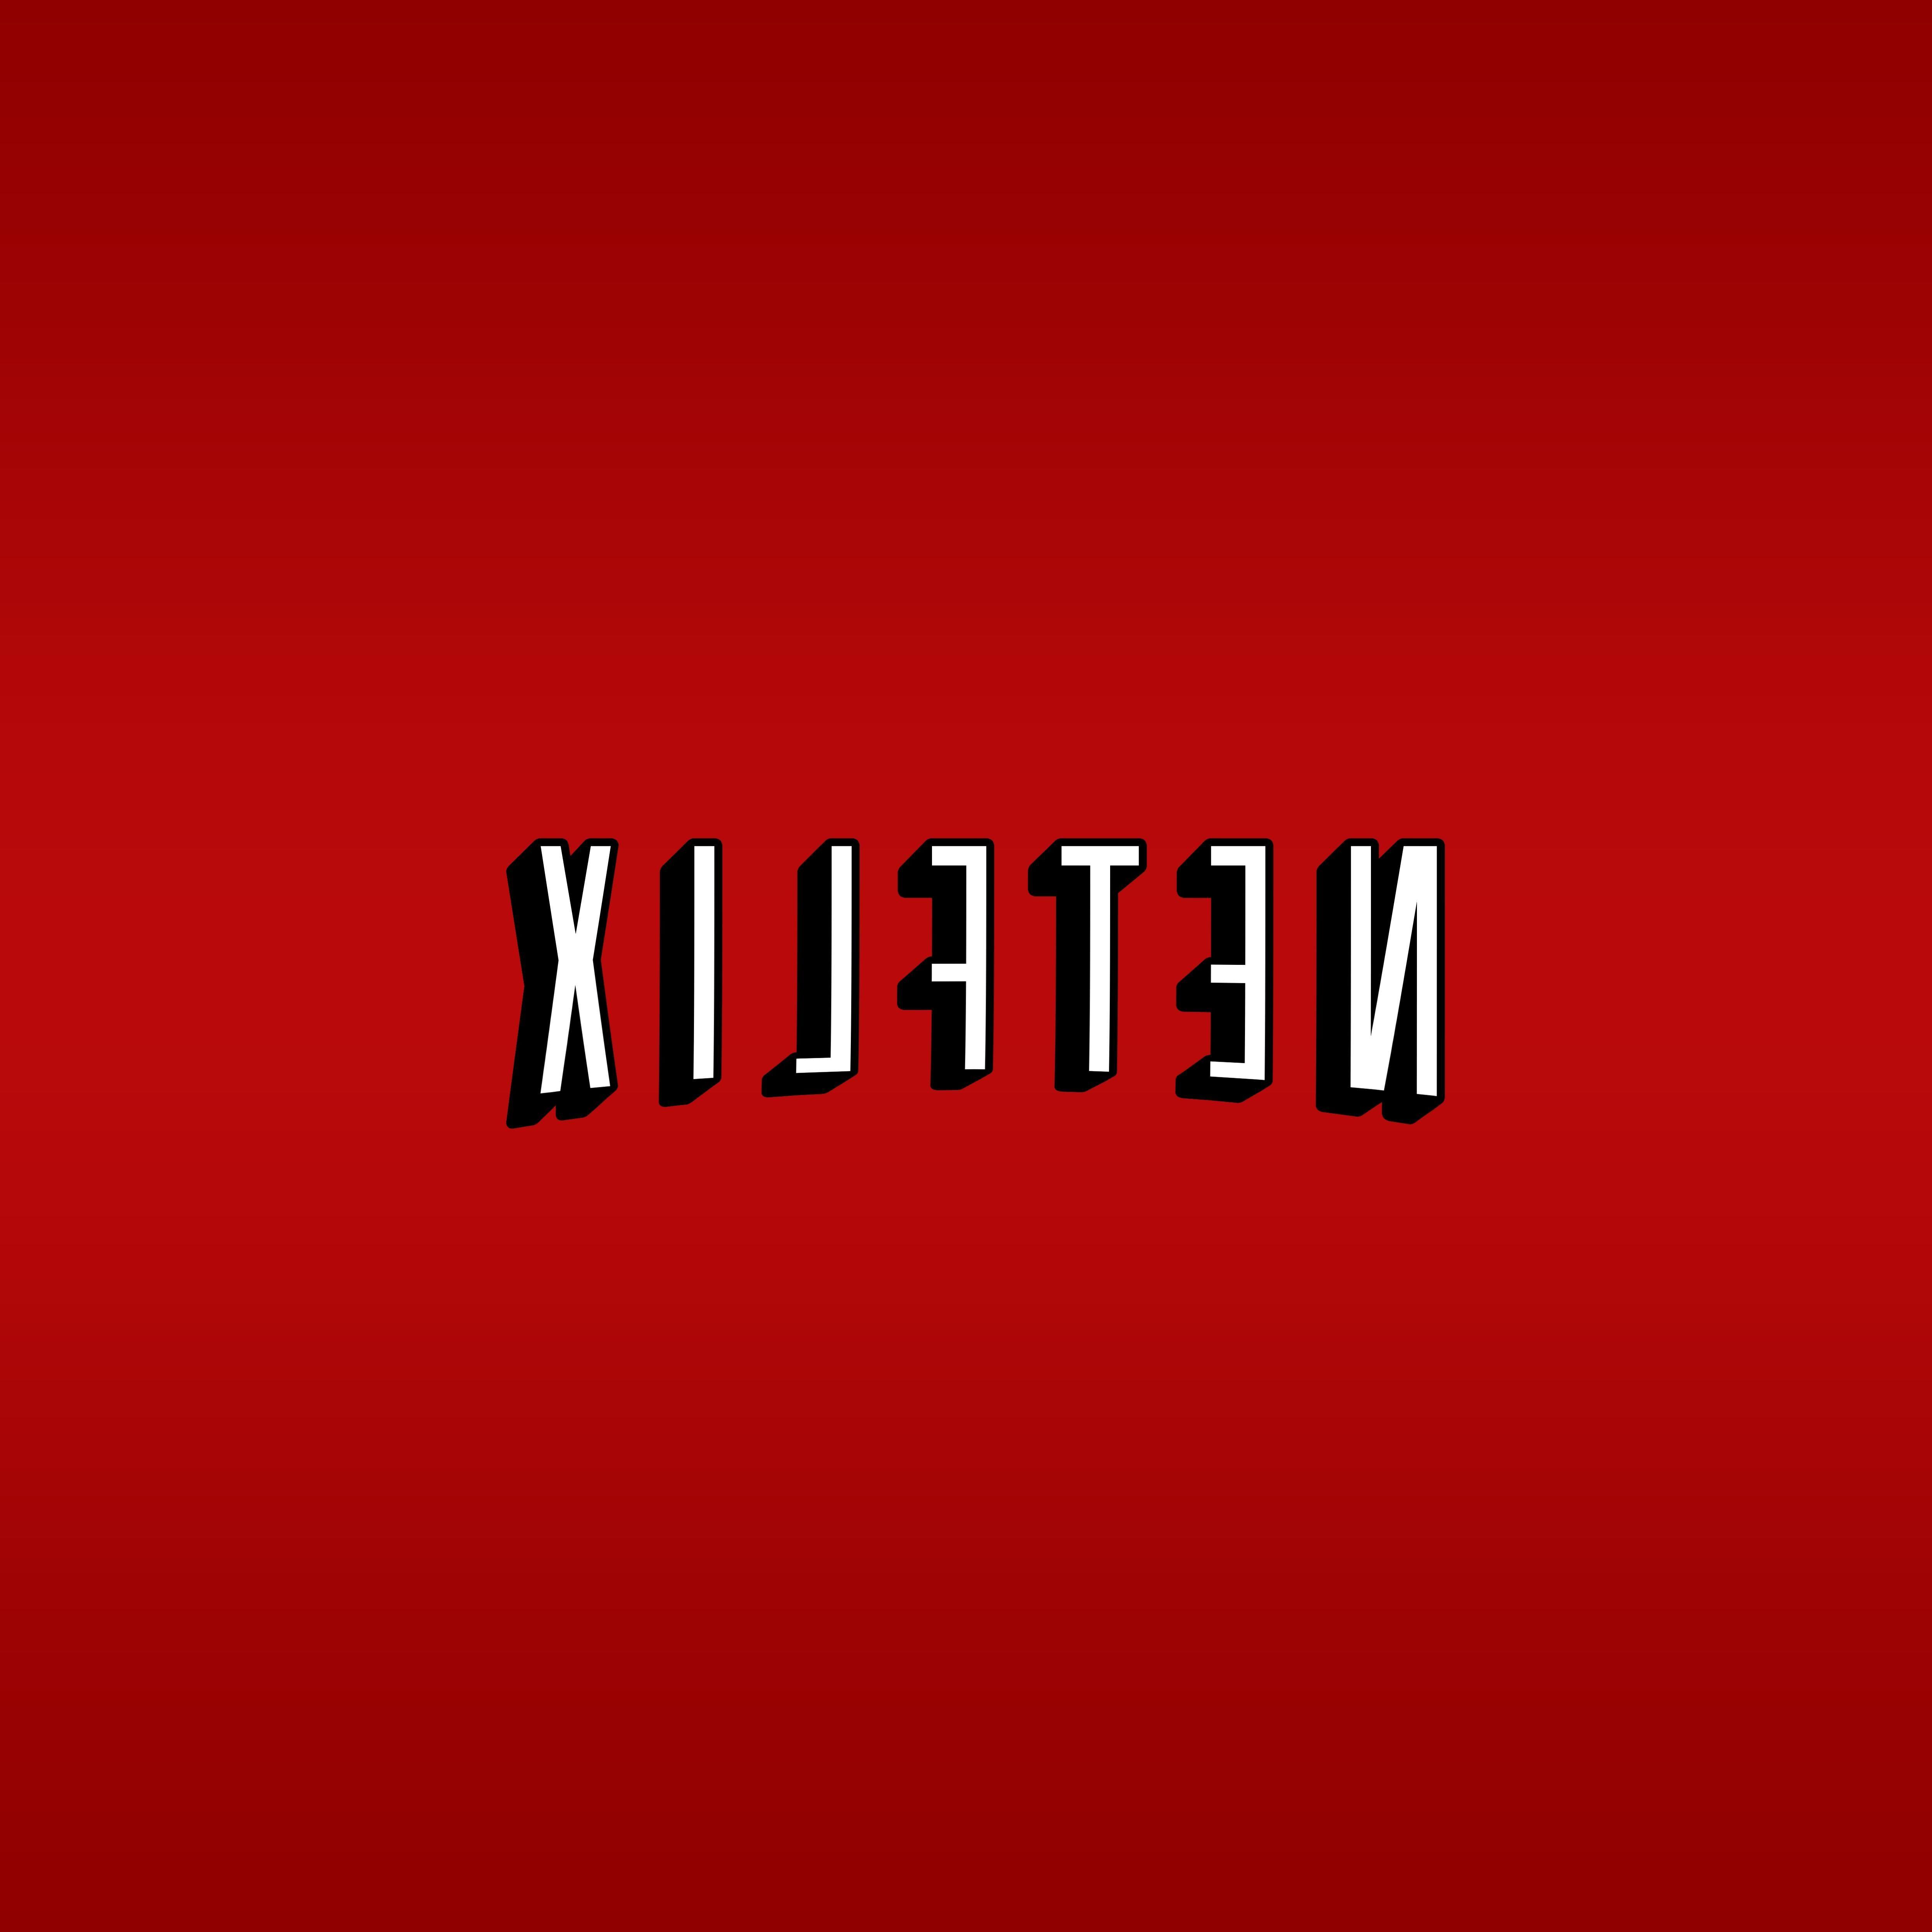 Netflix App Logo - Free Netflix Logo Icon 246976 | Download Netflix Logo Icon - 246976